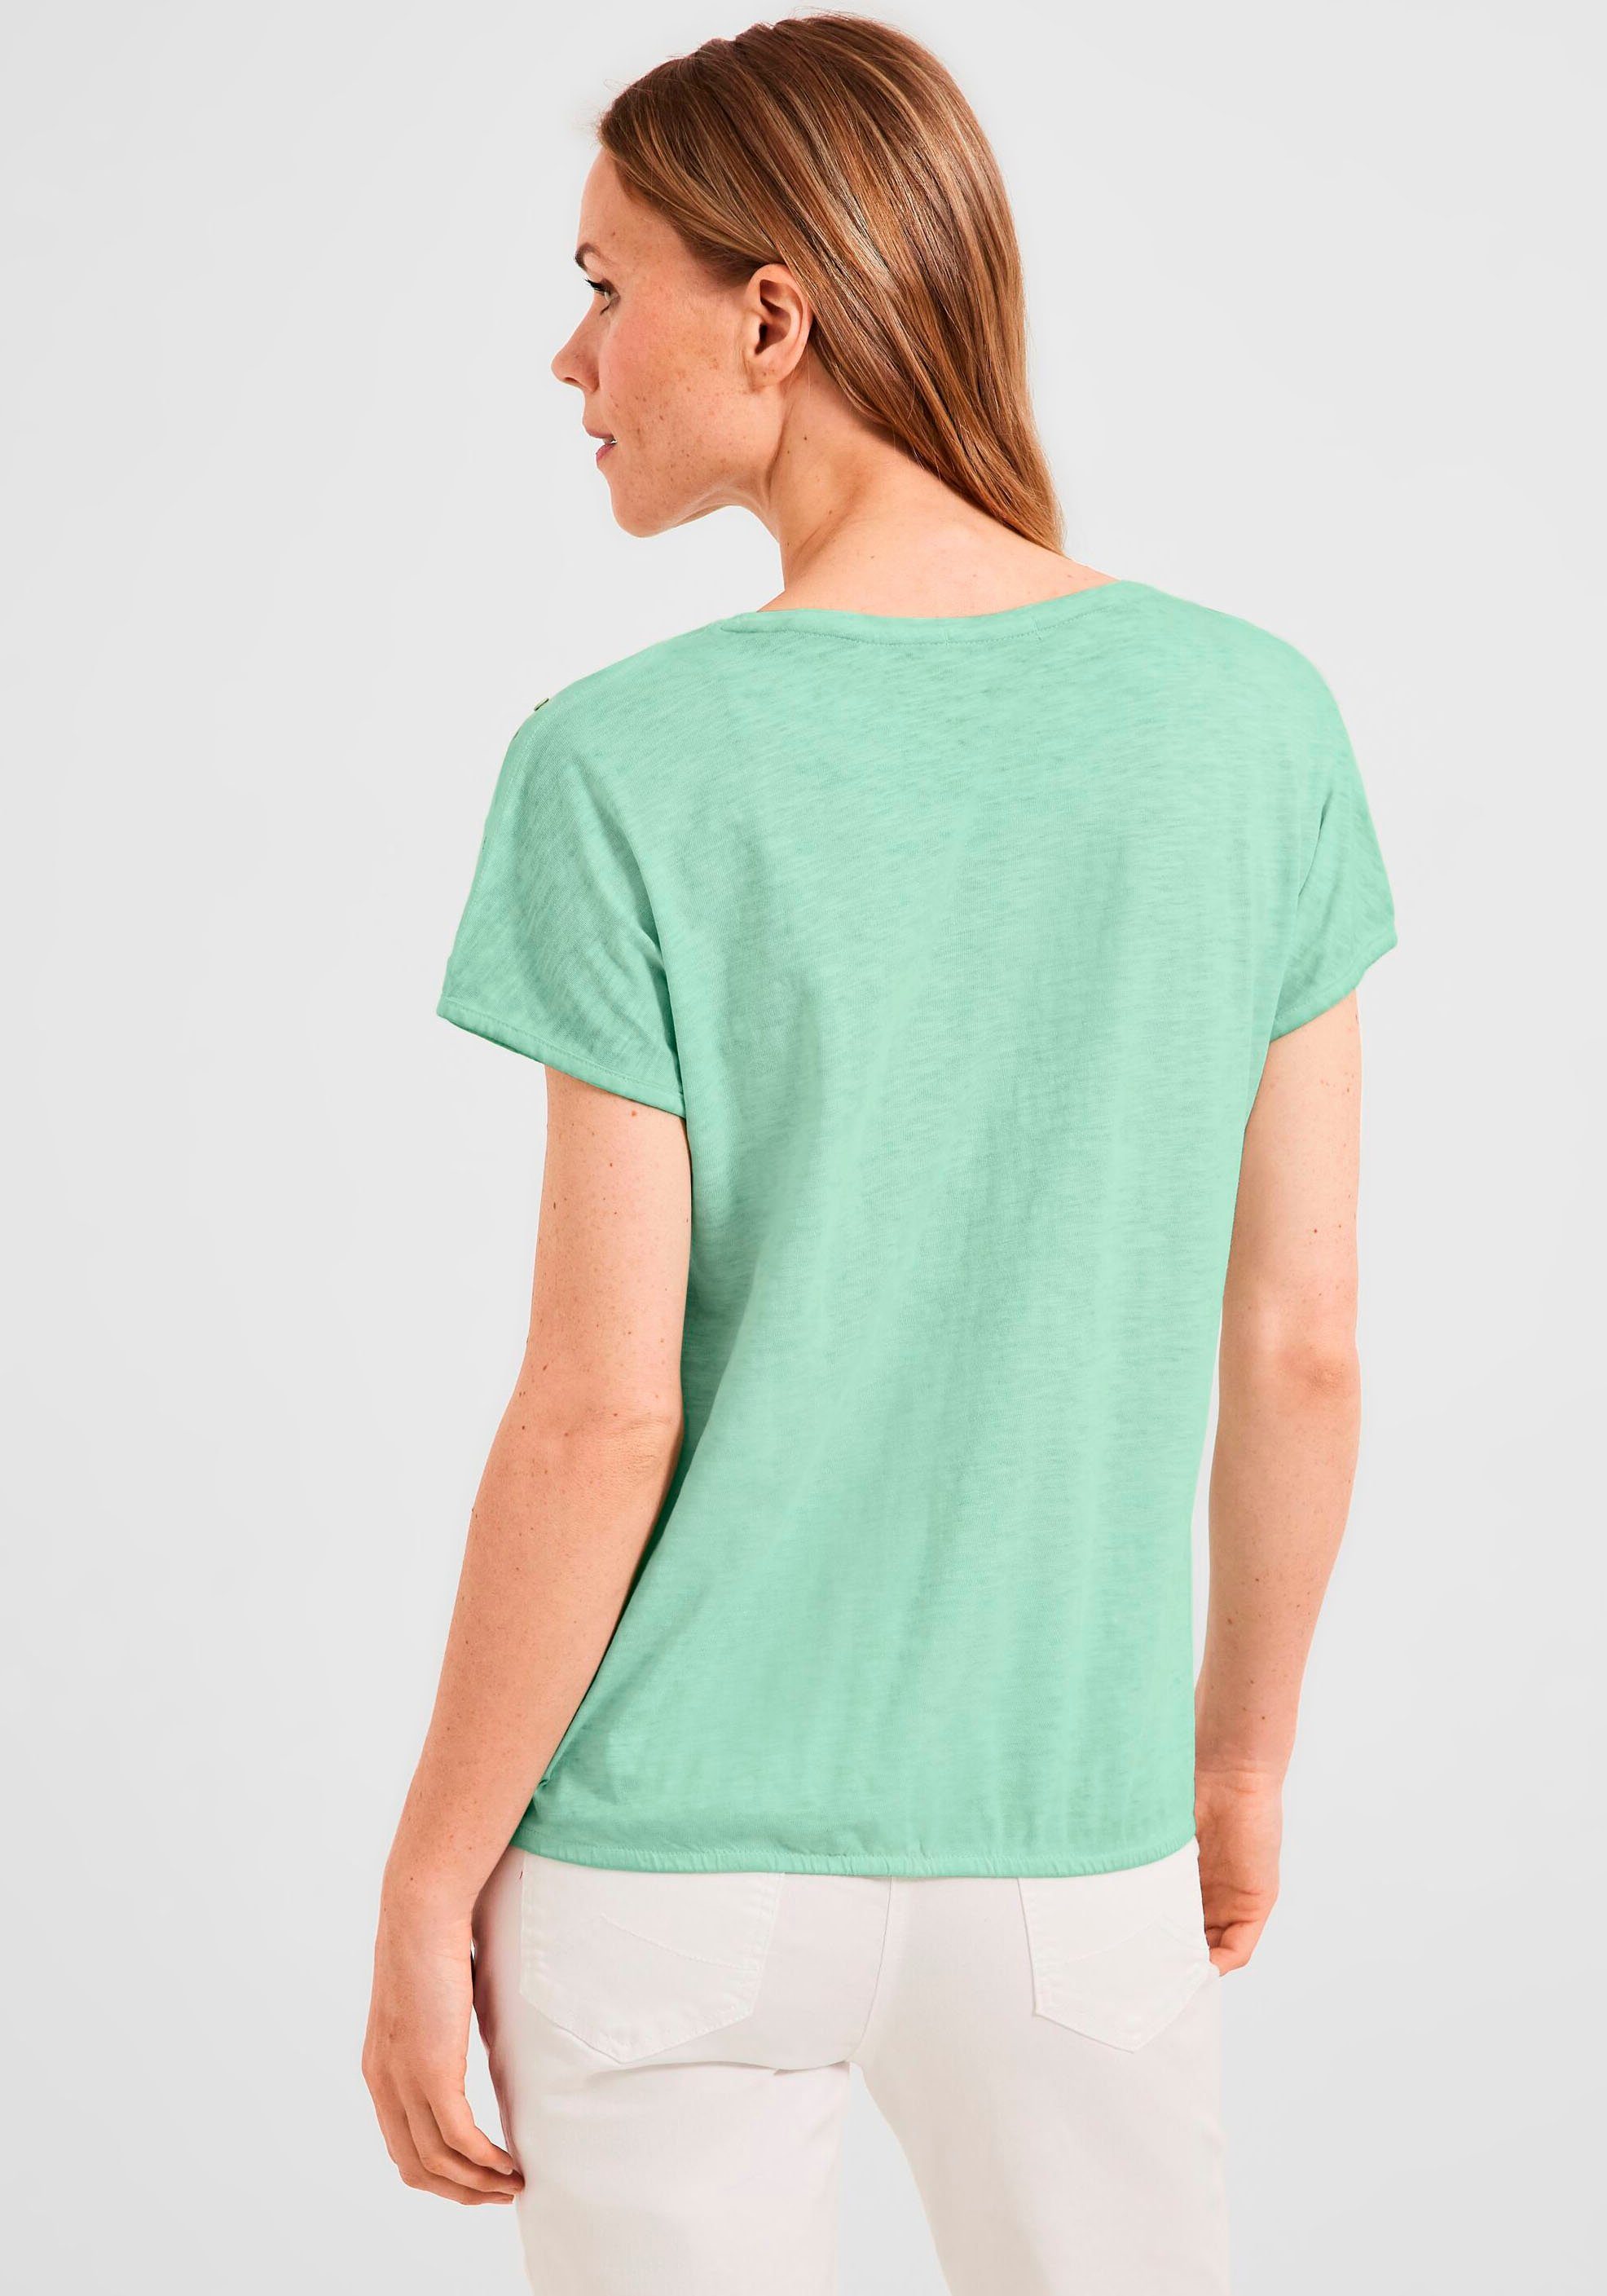 Cut-Outs an Cecil T-Shirt green den Schultern mit